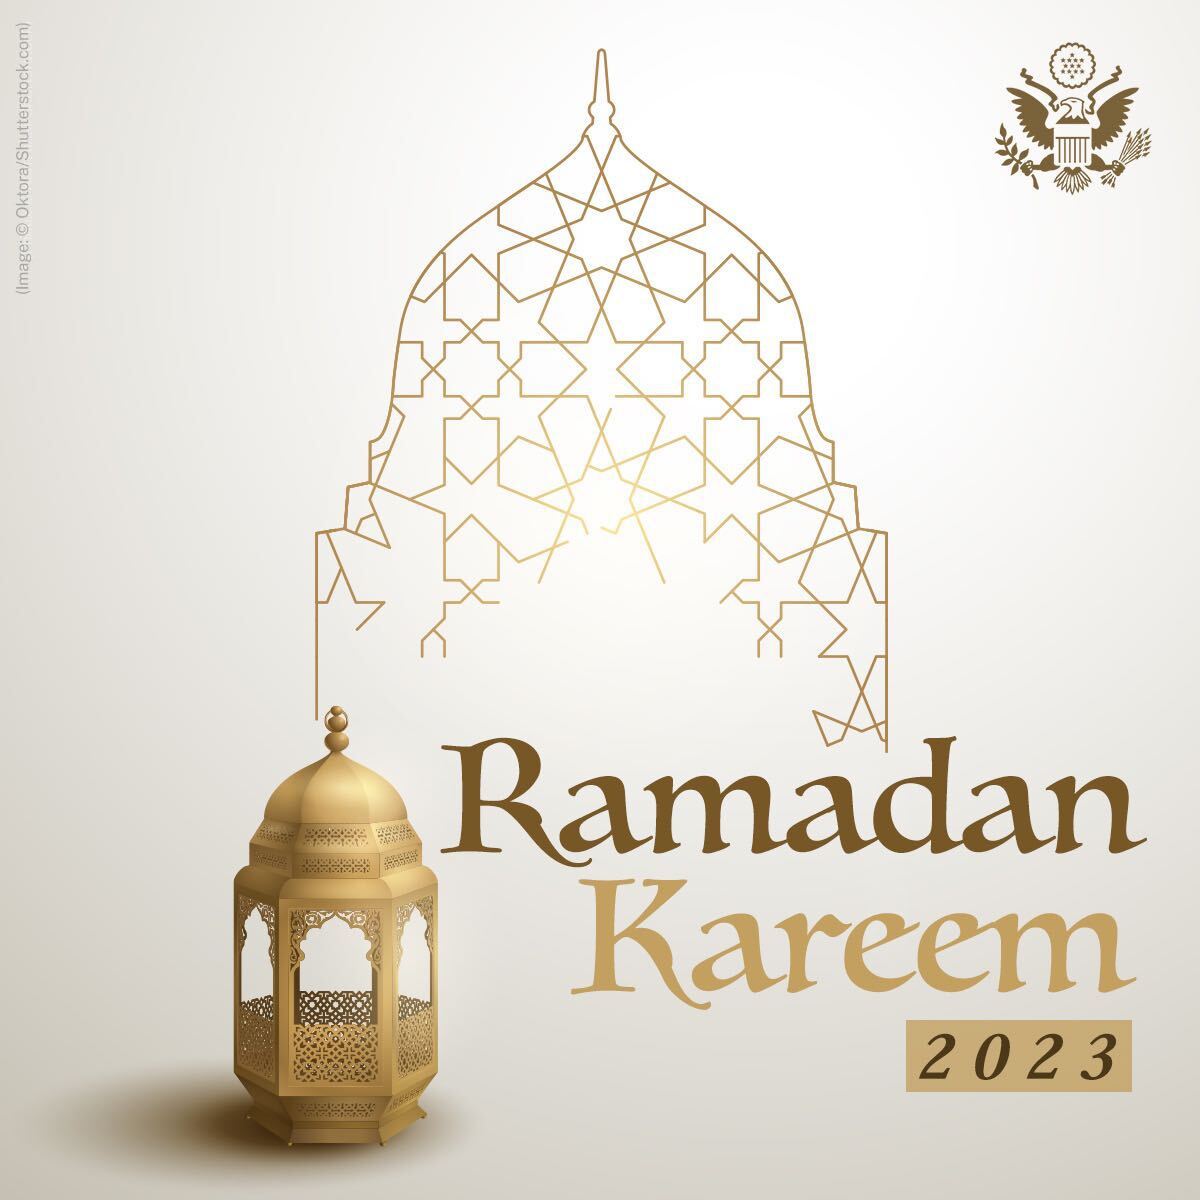 “Stunning Compilation of Full 4K Ramadan Kareem Images: Over 999+”